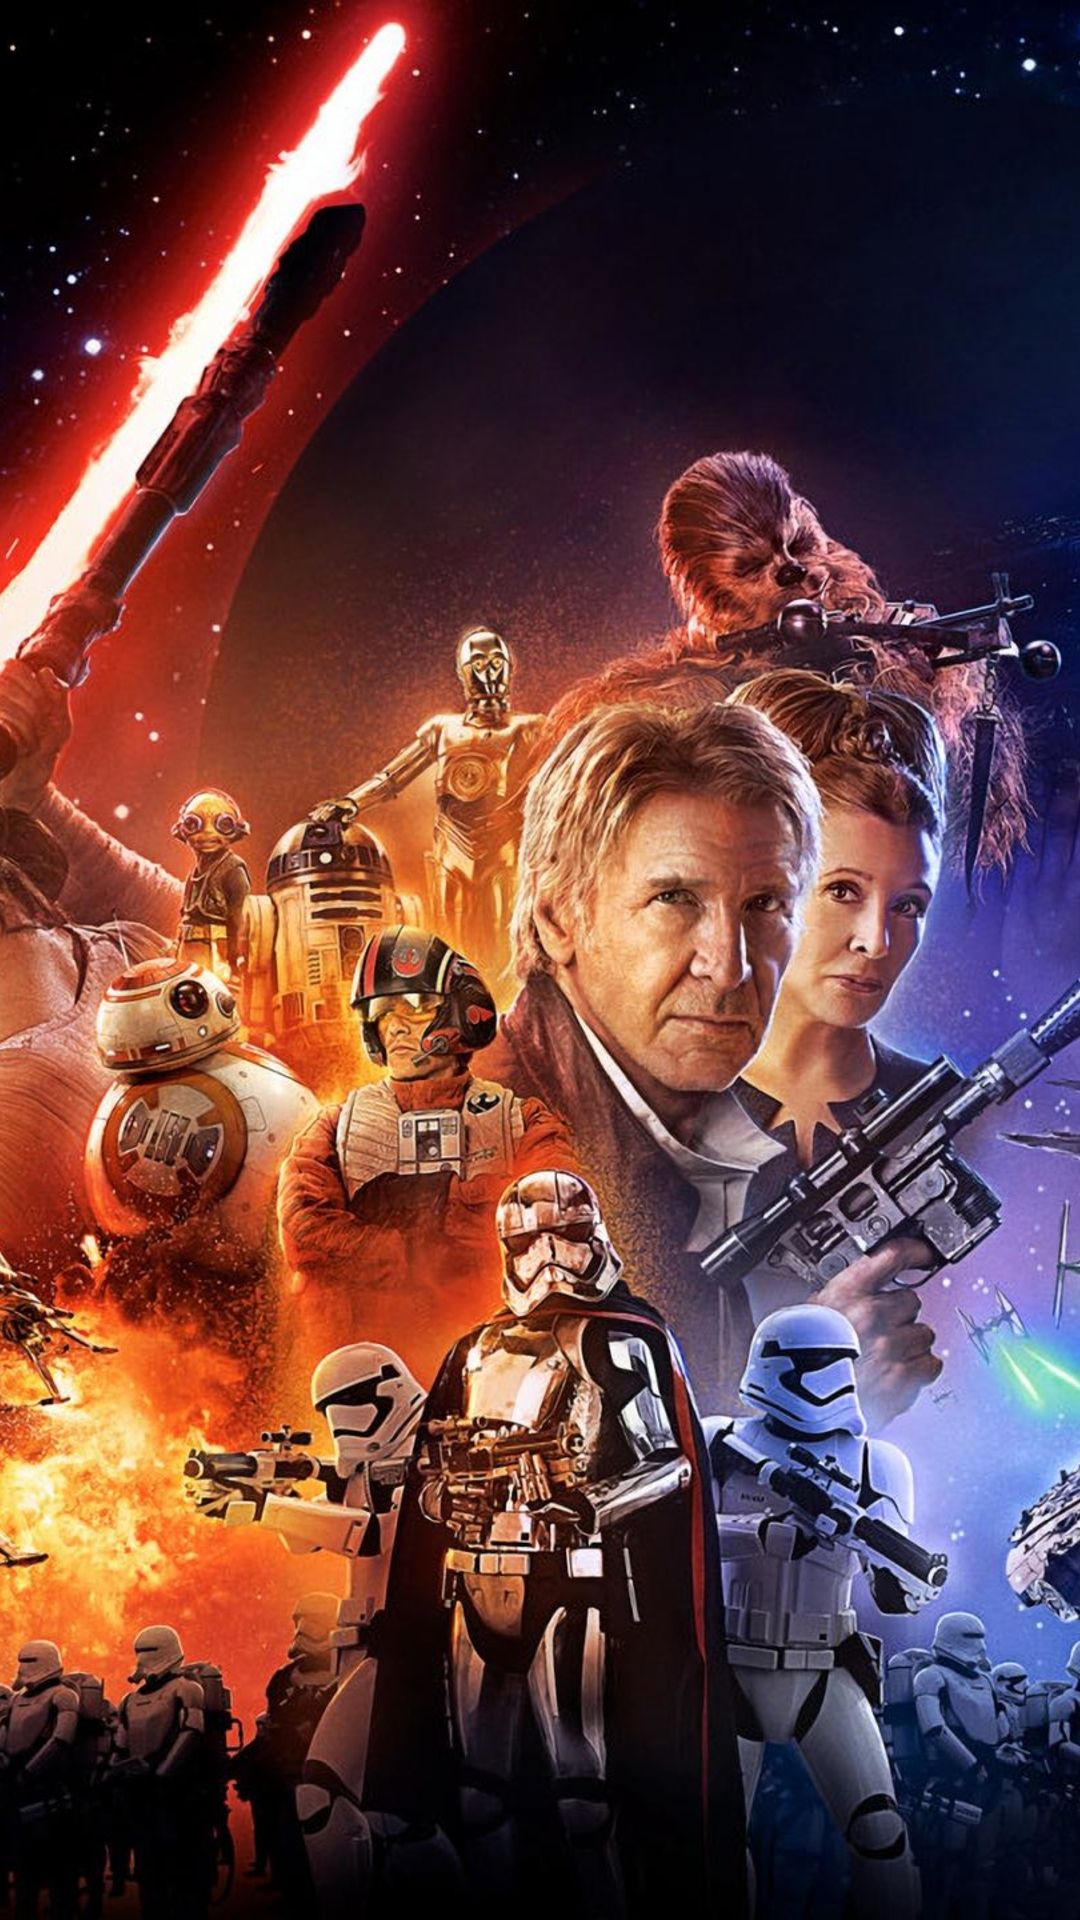 Star Wars The Force Awakens Wallpaper iDownloadBlog Movie Poster Mod